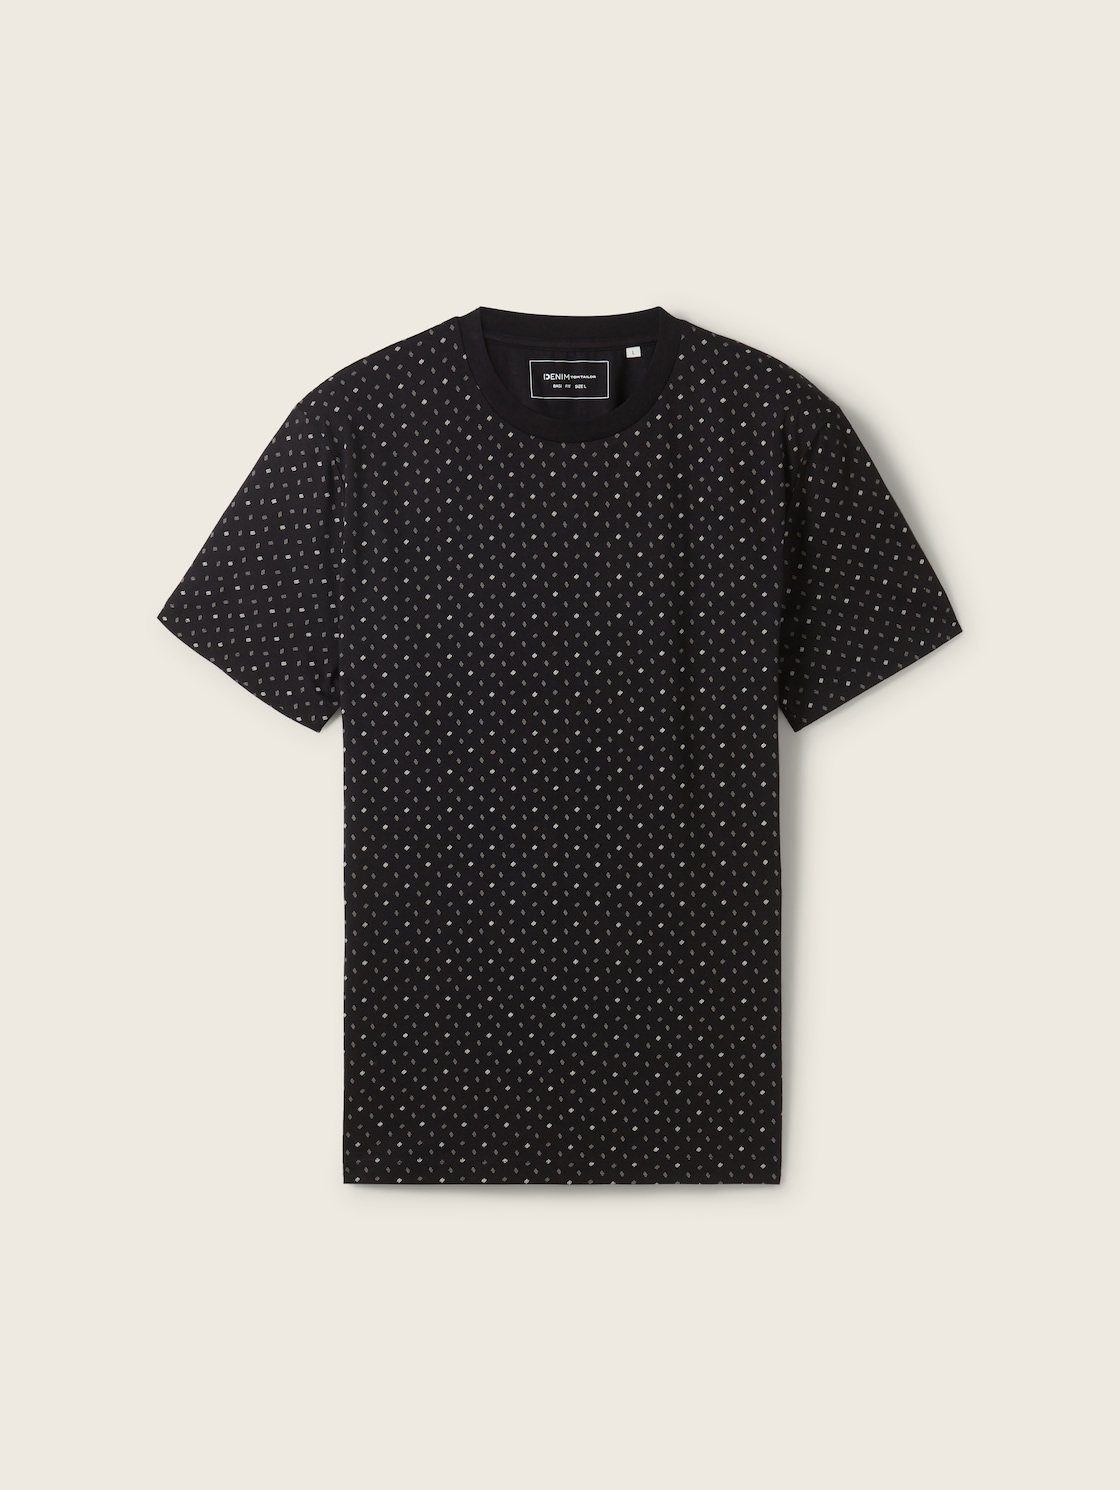 TOM TAILOR DENIM Herren T-Shirt mit Allover-Print, schwarz, Allover Print, Gr. M von Tom Tailor Denim